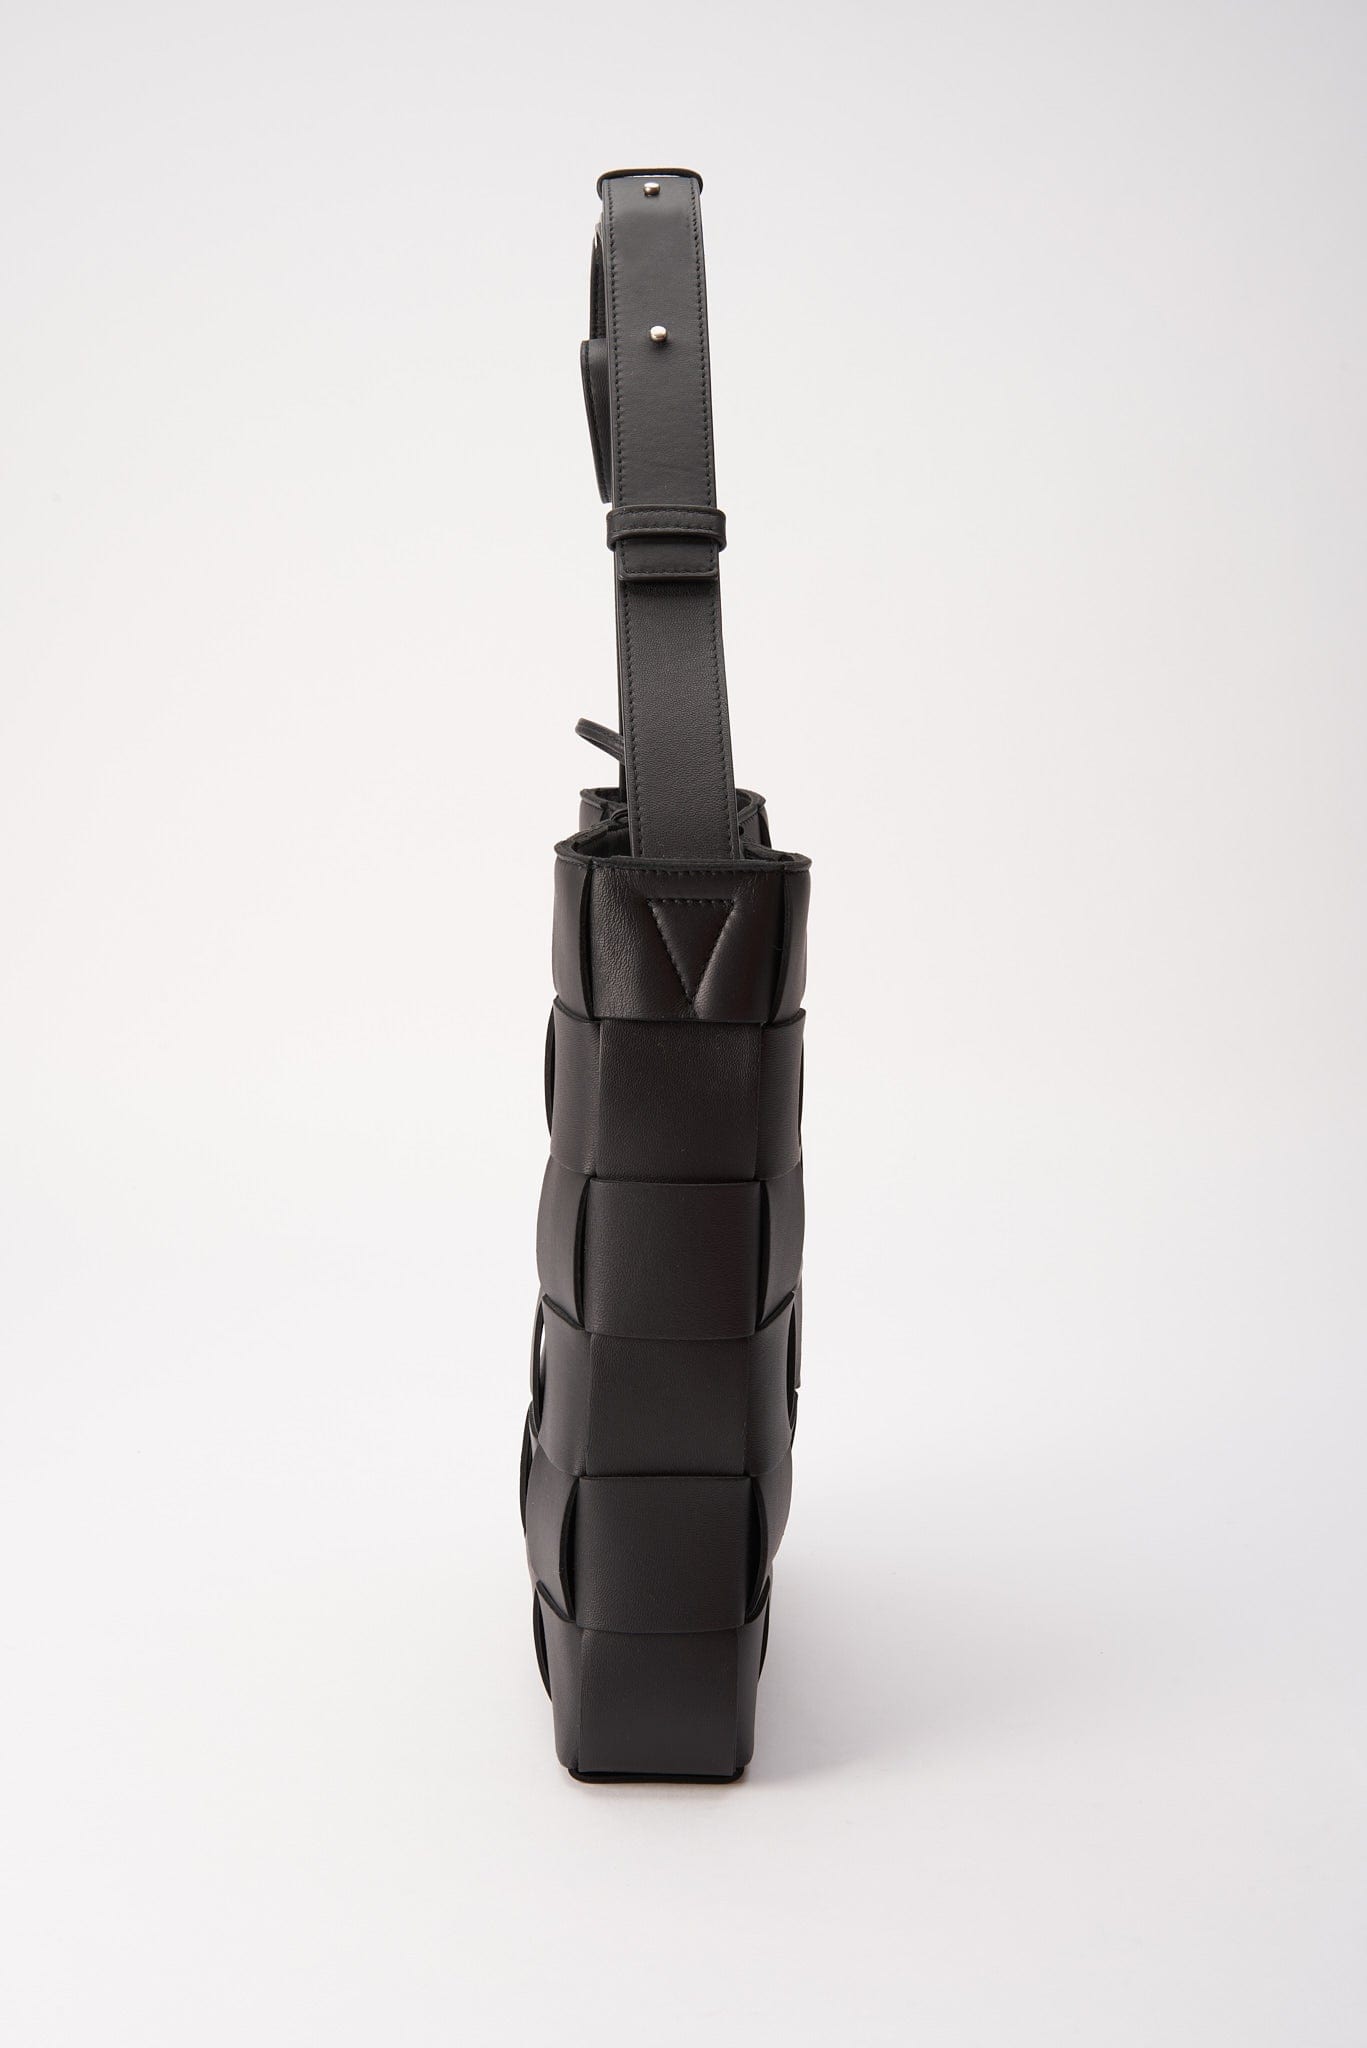 Bottega Veneta Intrecciato Black Leather Cassette Crossbody Bag